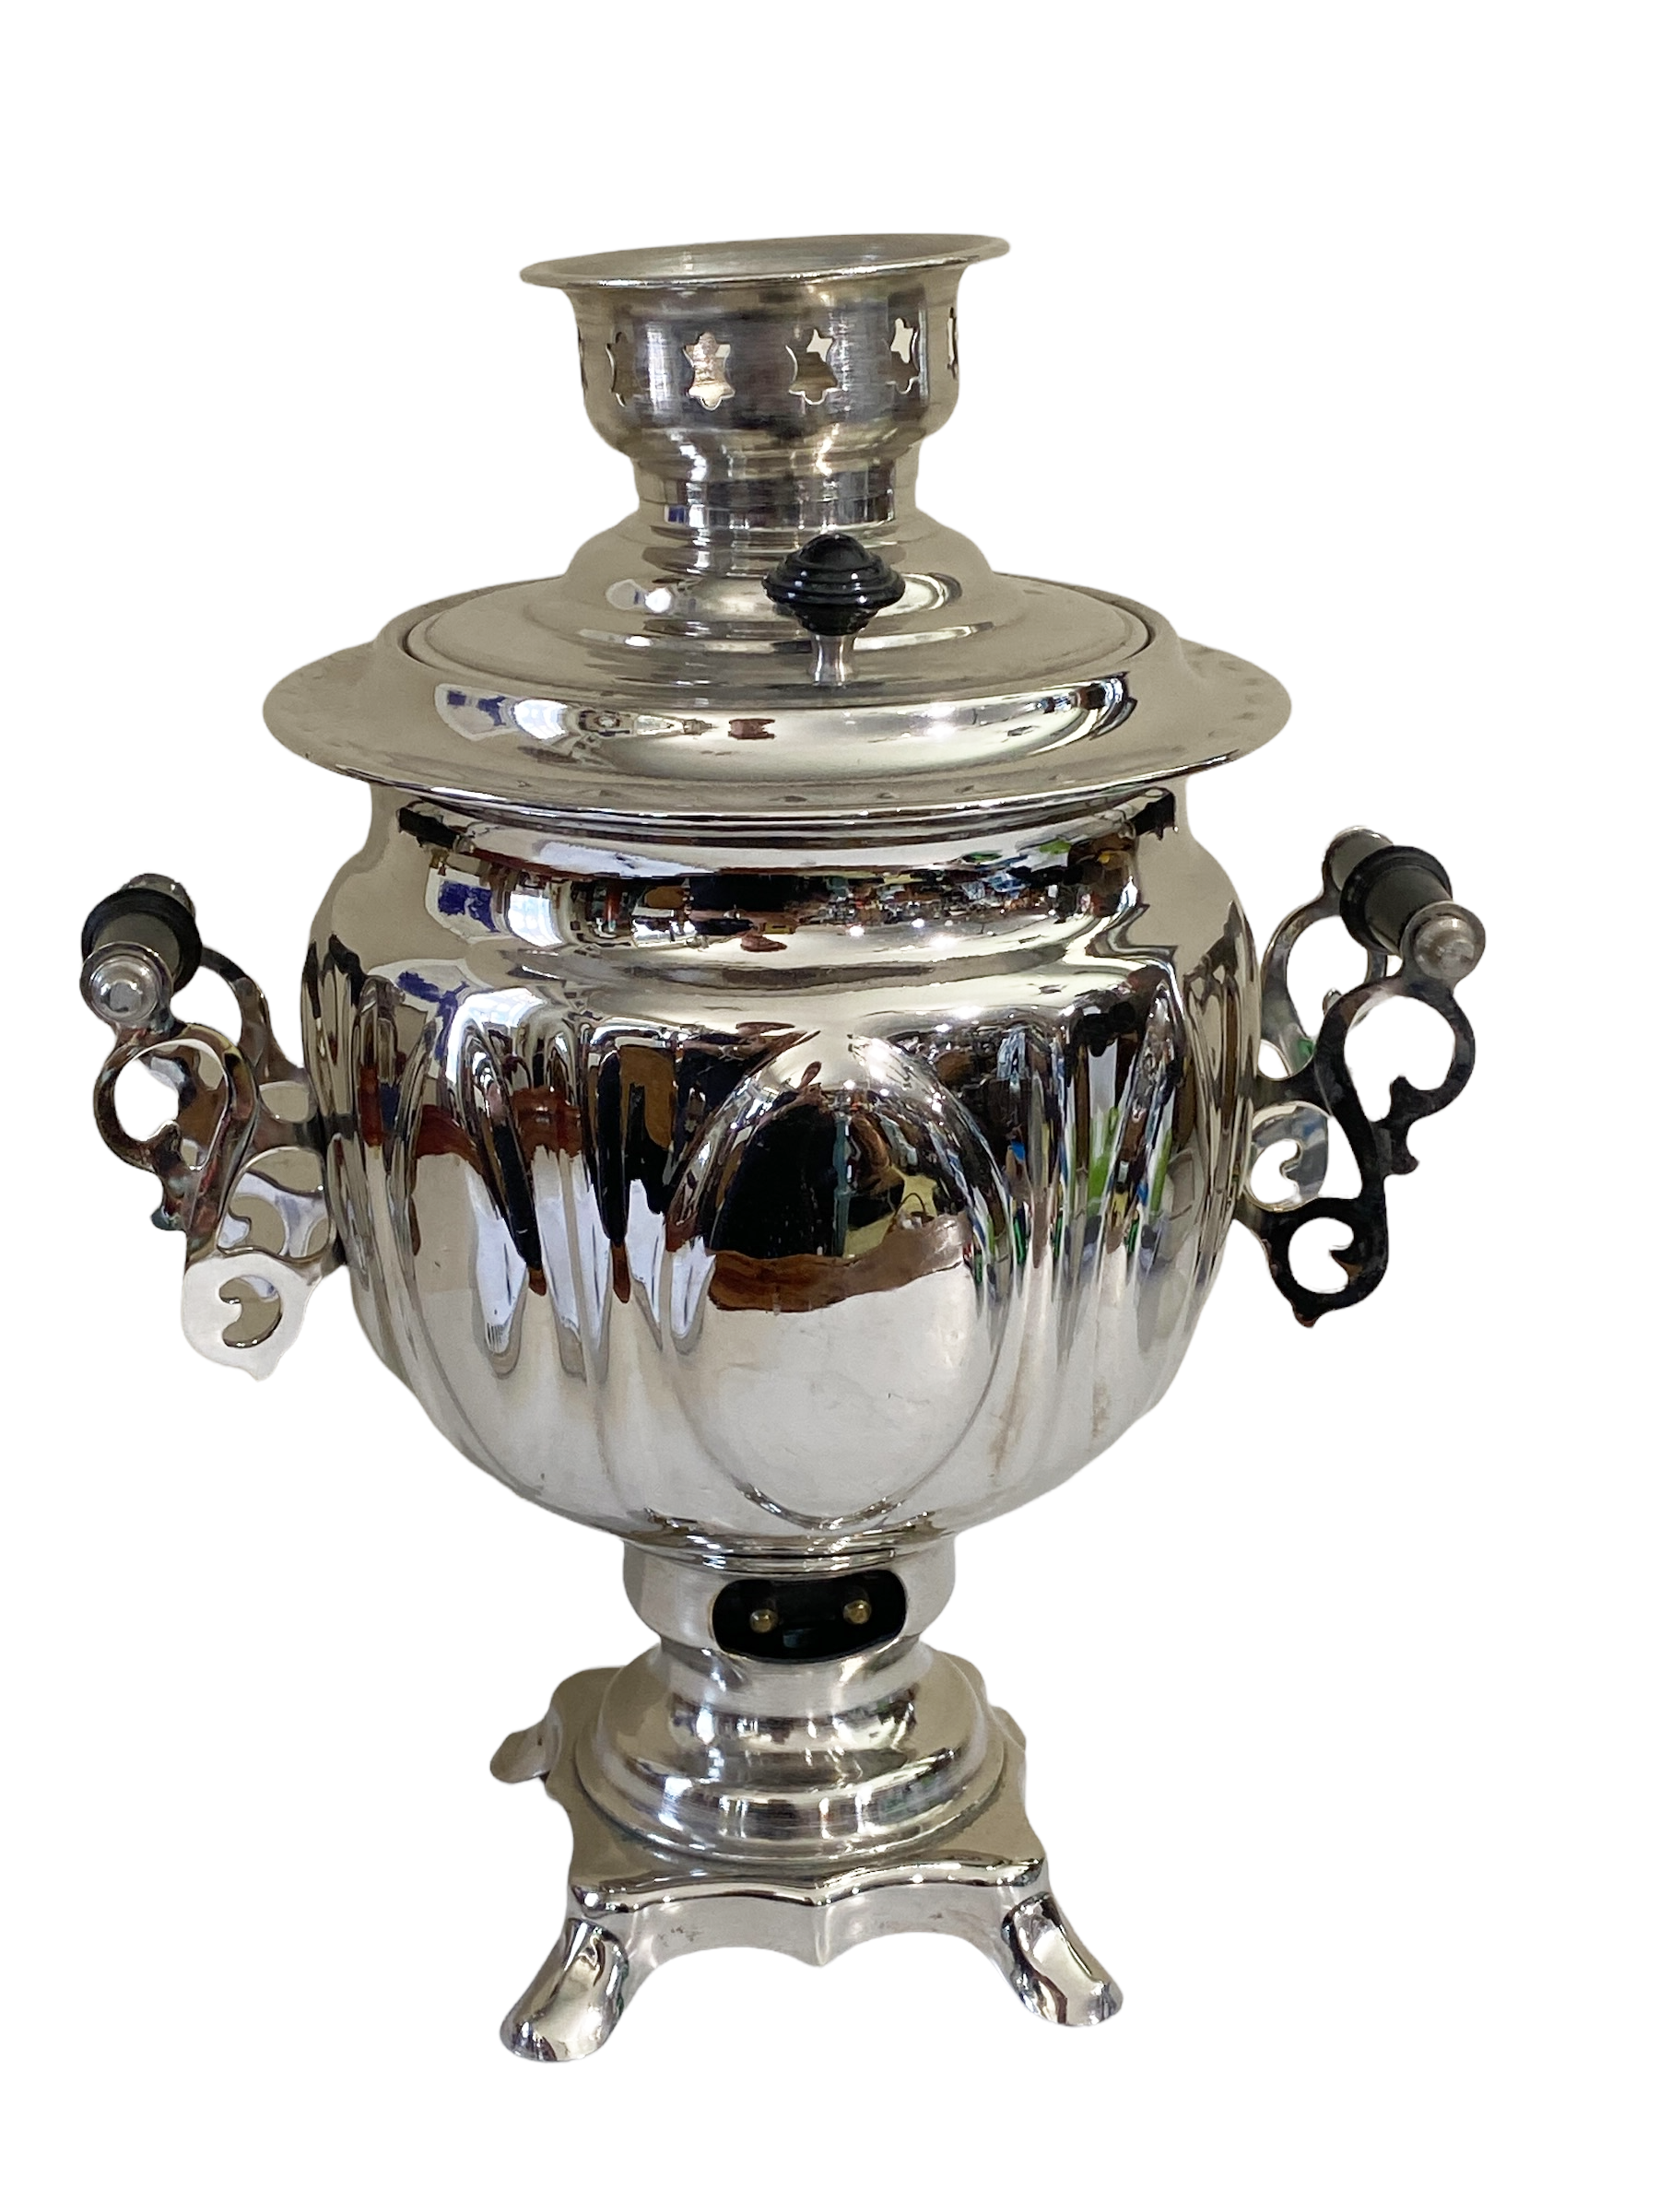 Sold at Auction: Brassware - electric samovar, small samovar, teapot etc.